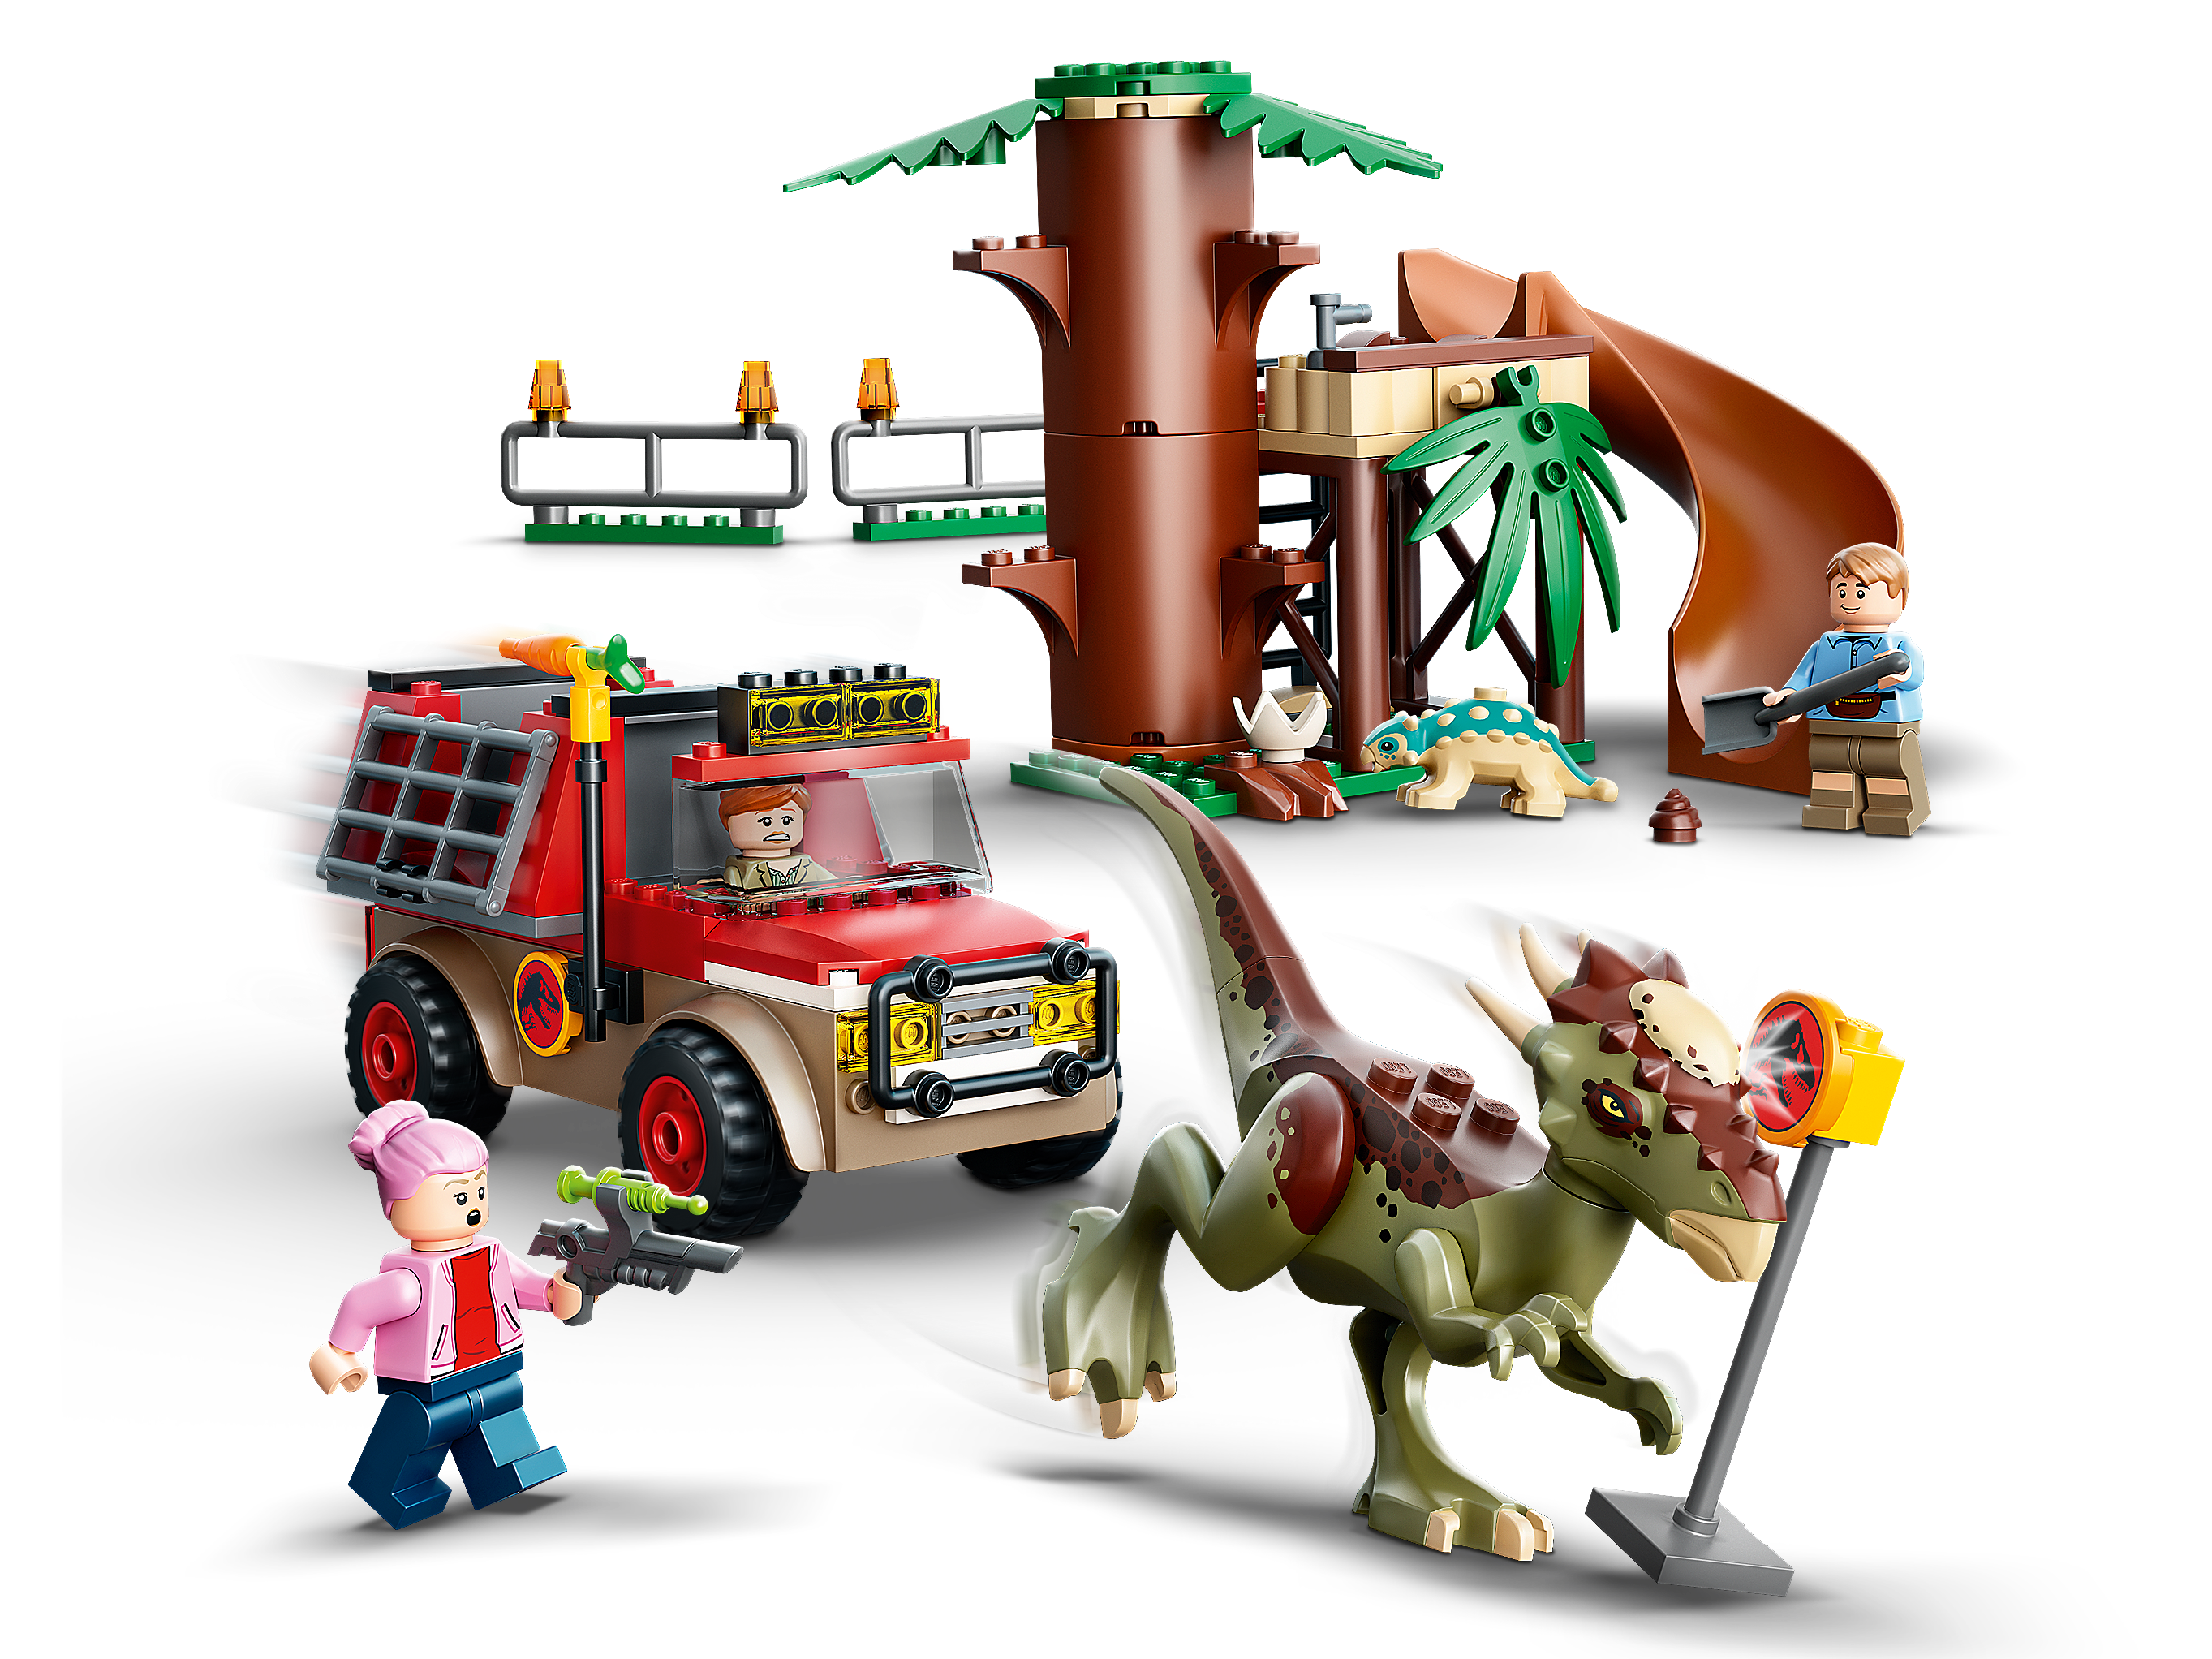 Lego Dinosaure Est Stygimoloch Jurassic World Multicolore